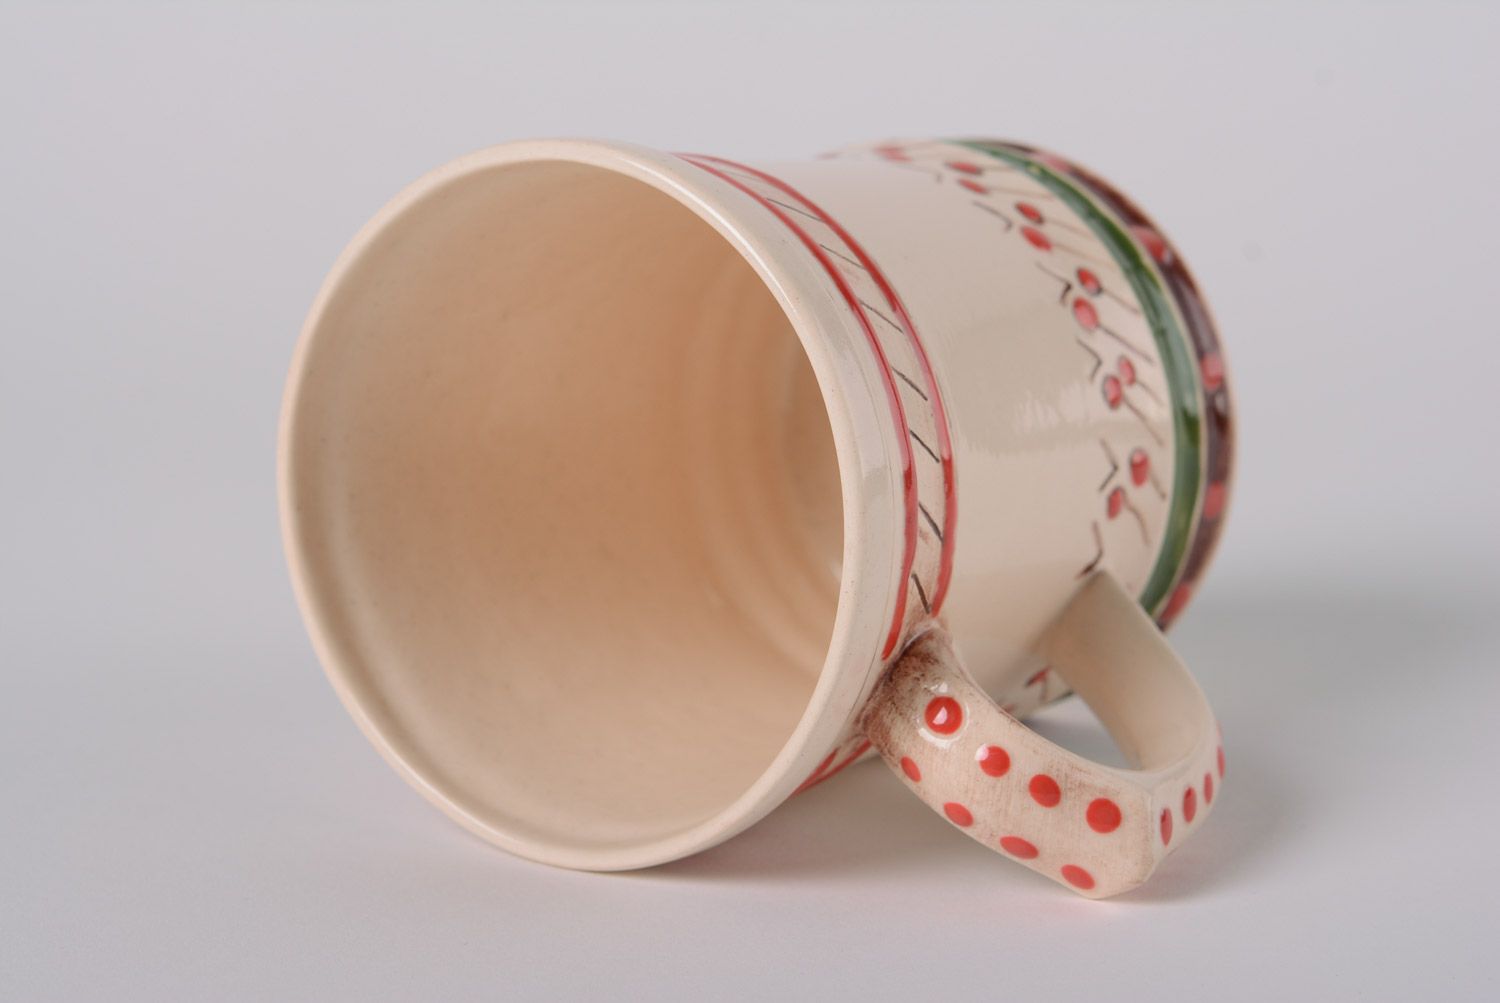 Handmade bemalte Tasse aus Ton mit bunter Glasur Bemalung in Majolika Technik foto 4